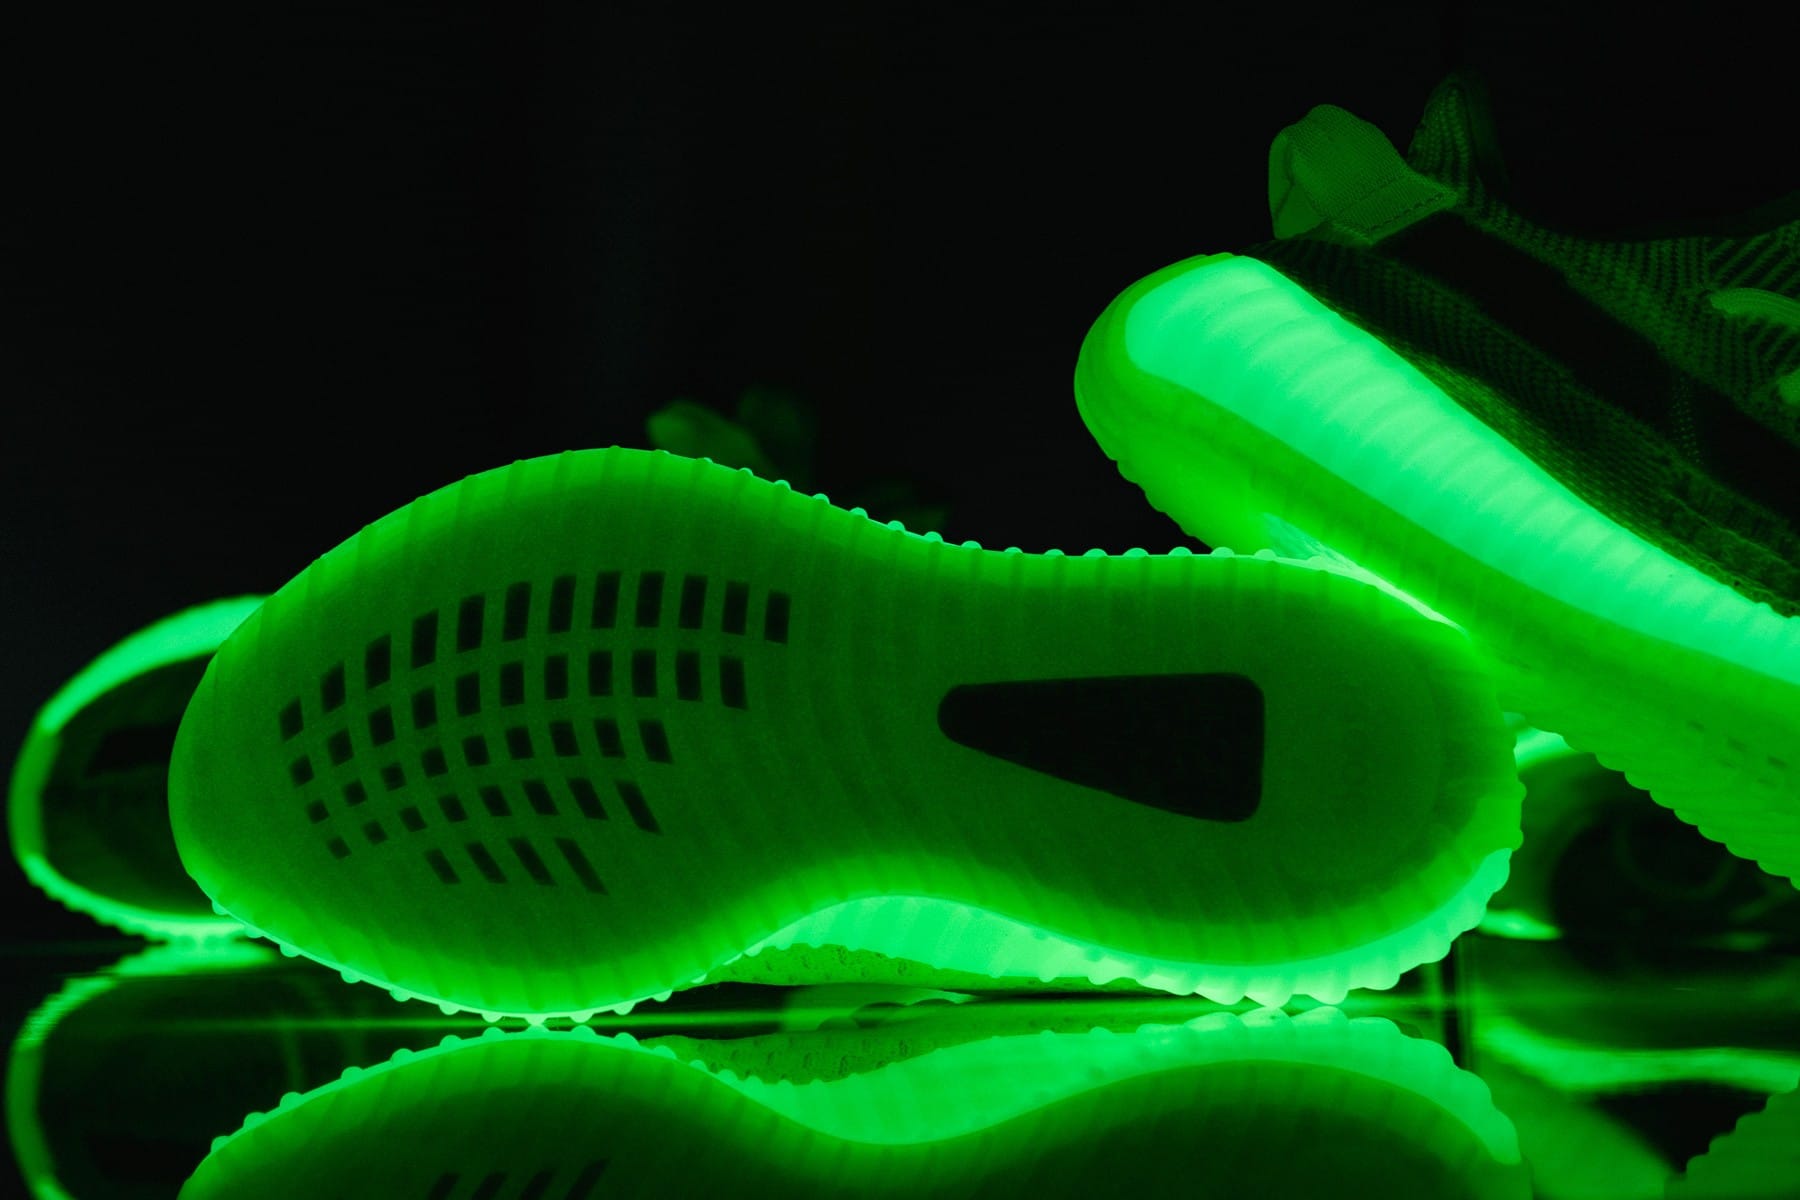 Supreme x Nike 聯名系列及夜光 YEEZY BOOST 350 V2 等本周不容錯過的 8 項新品發售